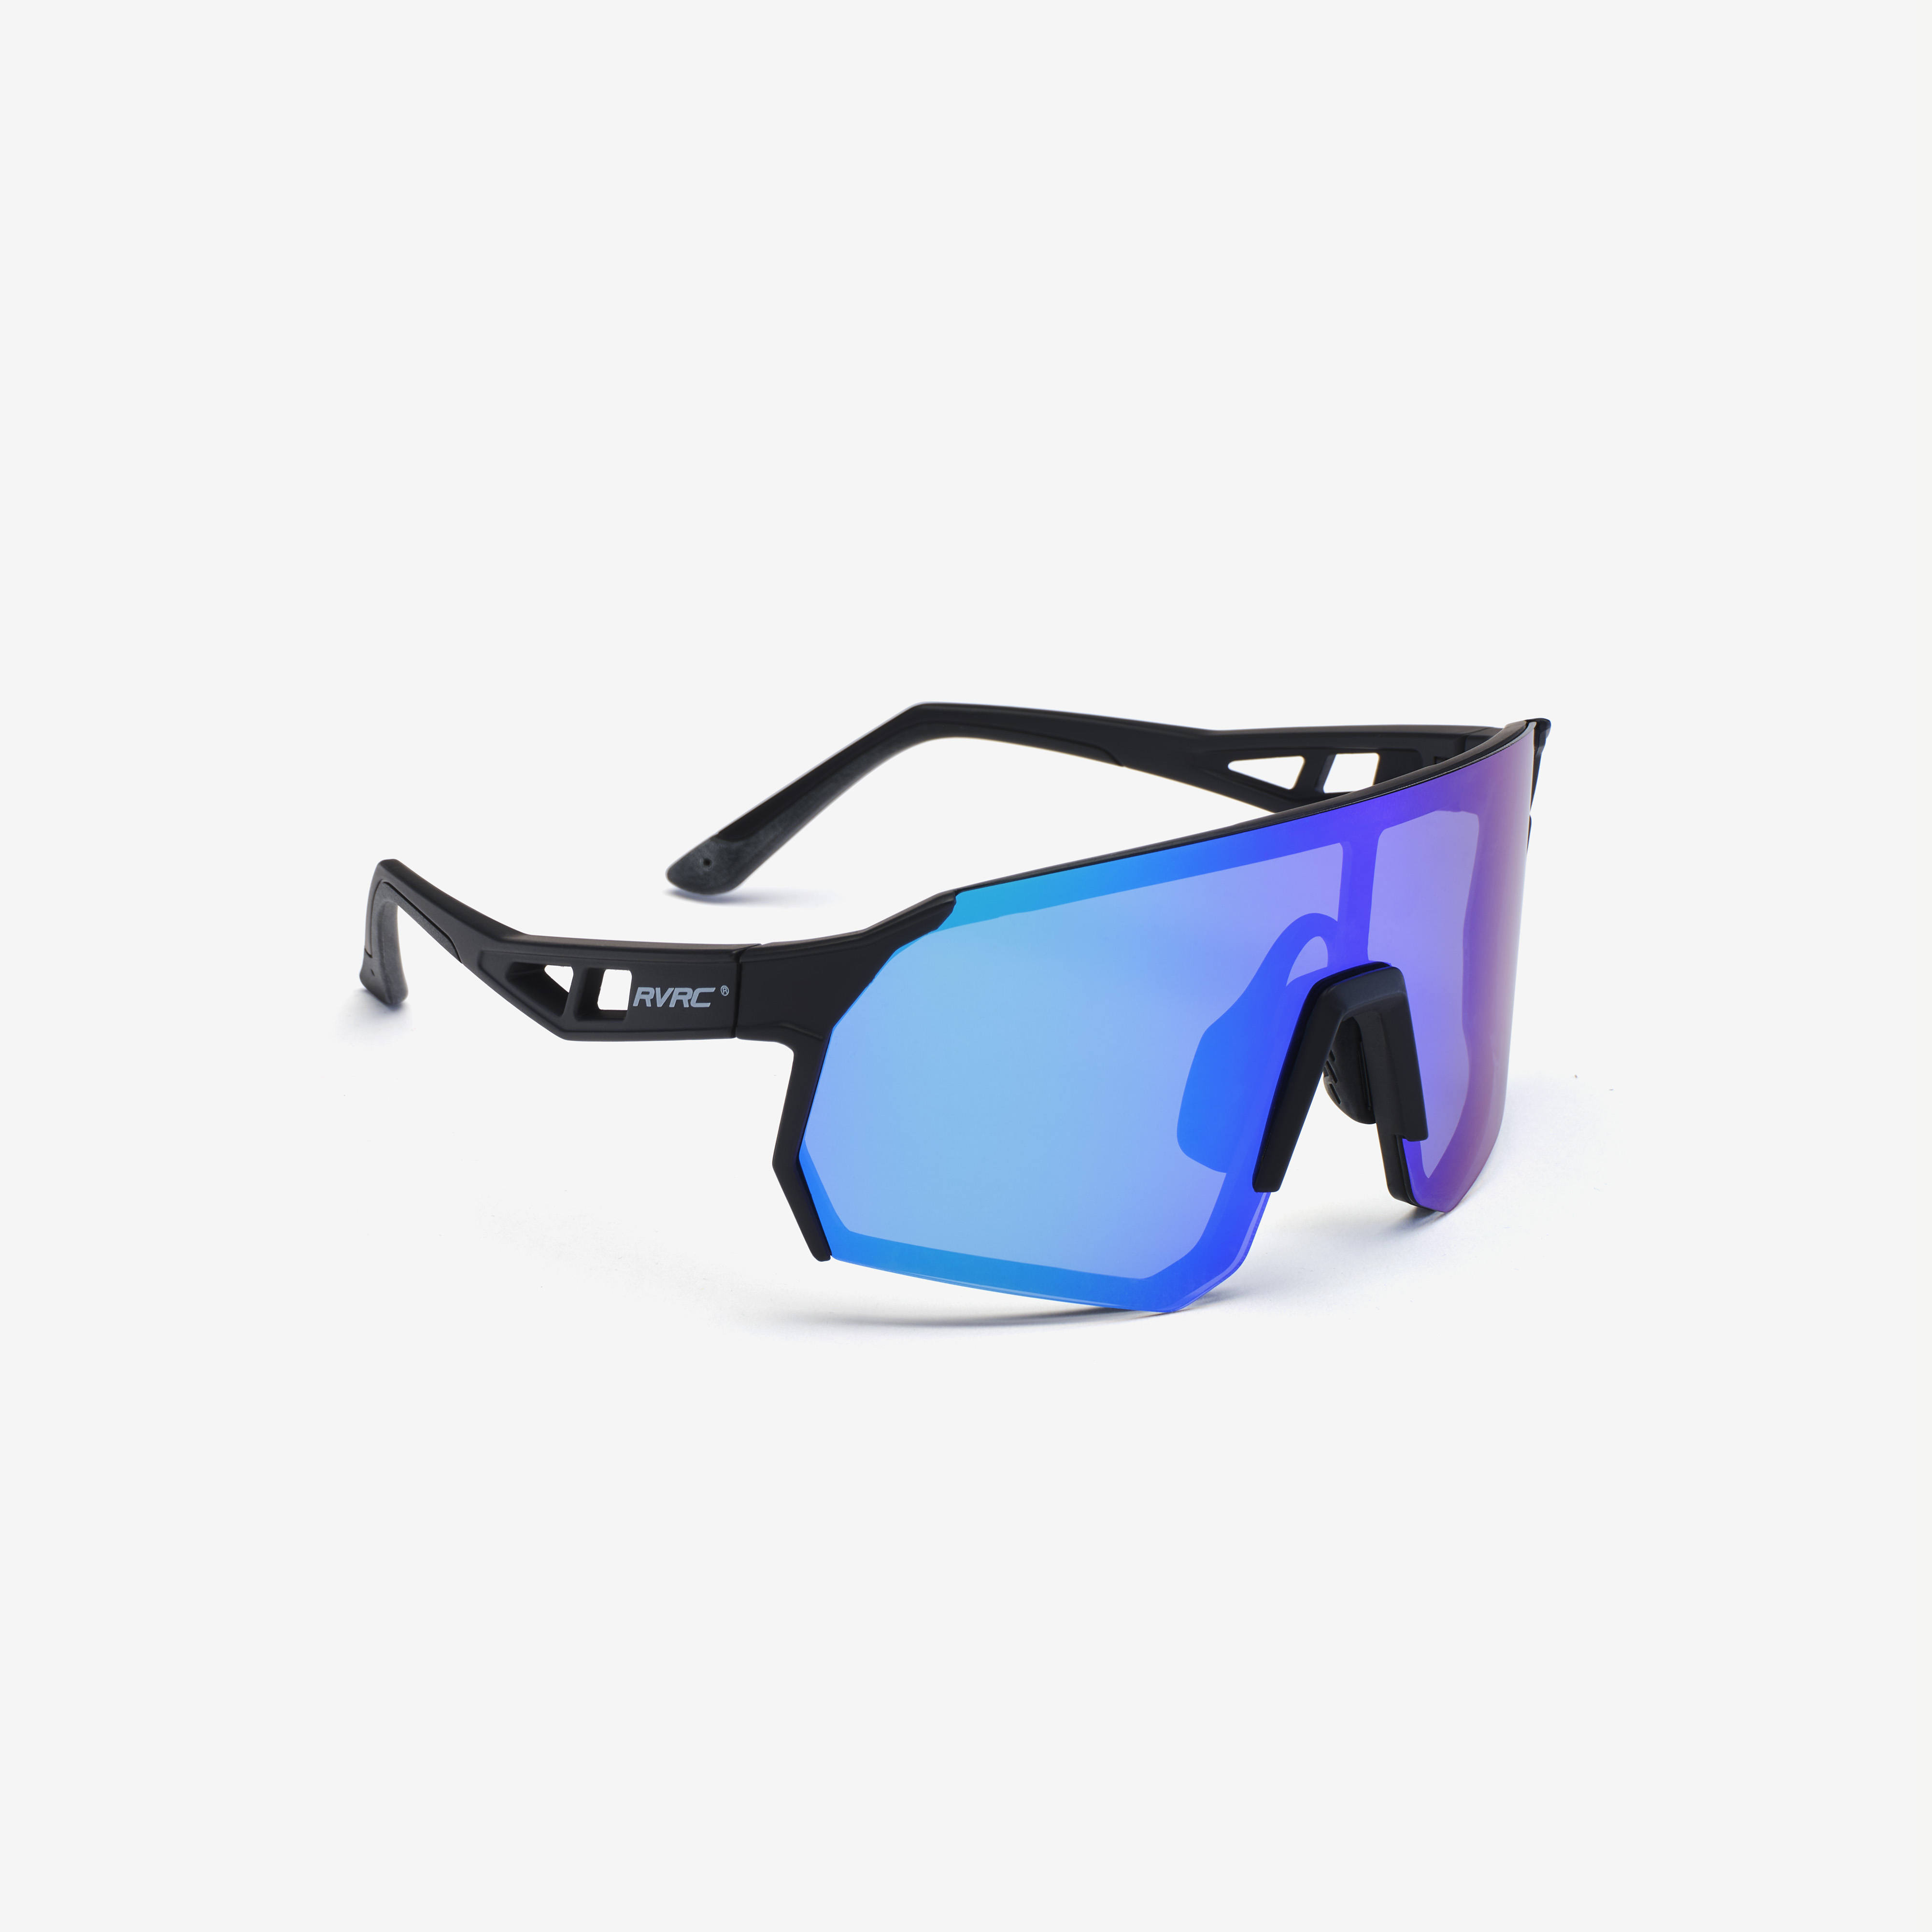 Castor Polarized Sports Sunglasses Black/Green Blue